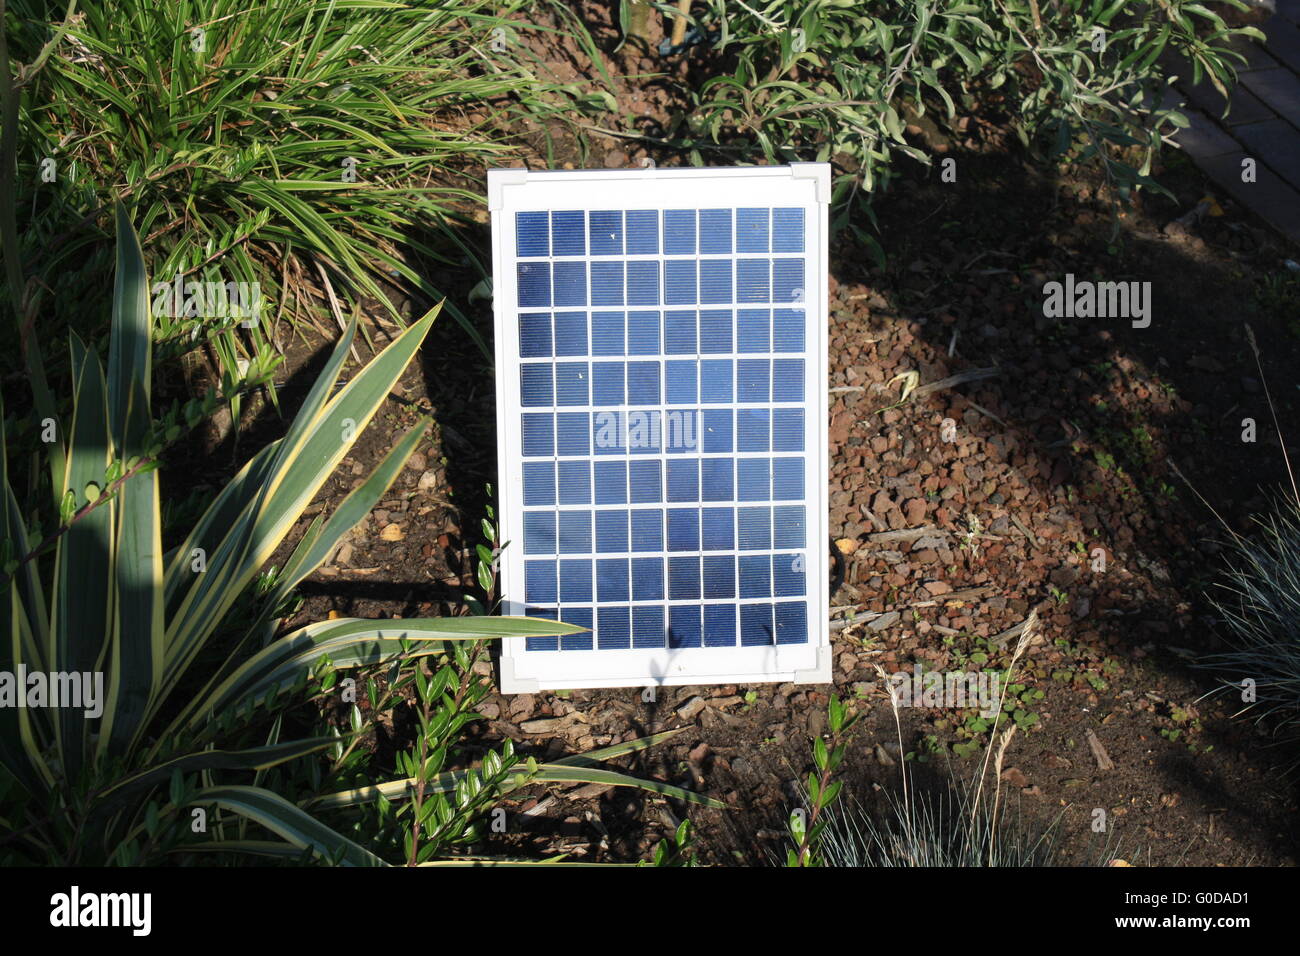 small solar field in the garden Stock Photo